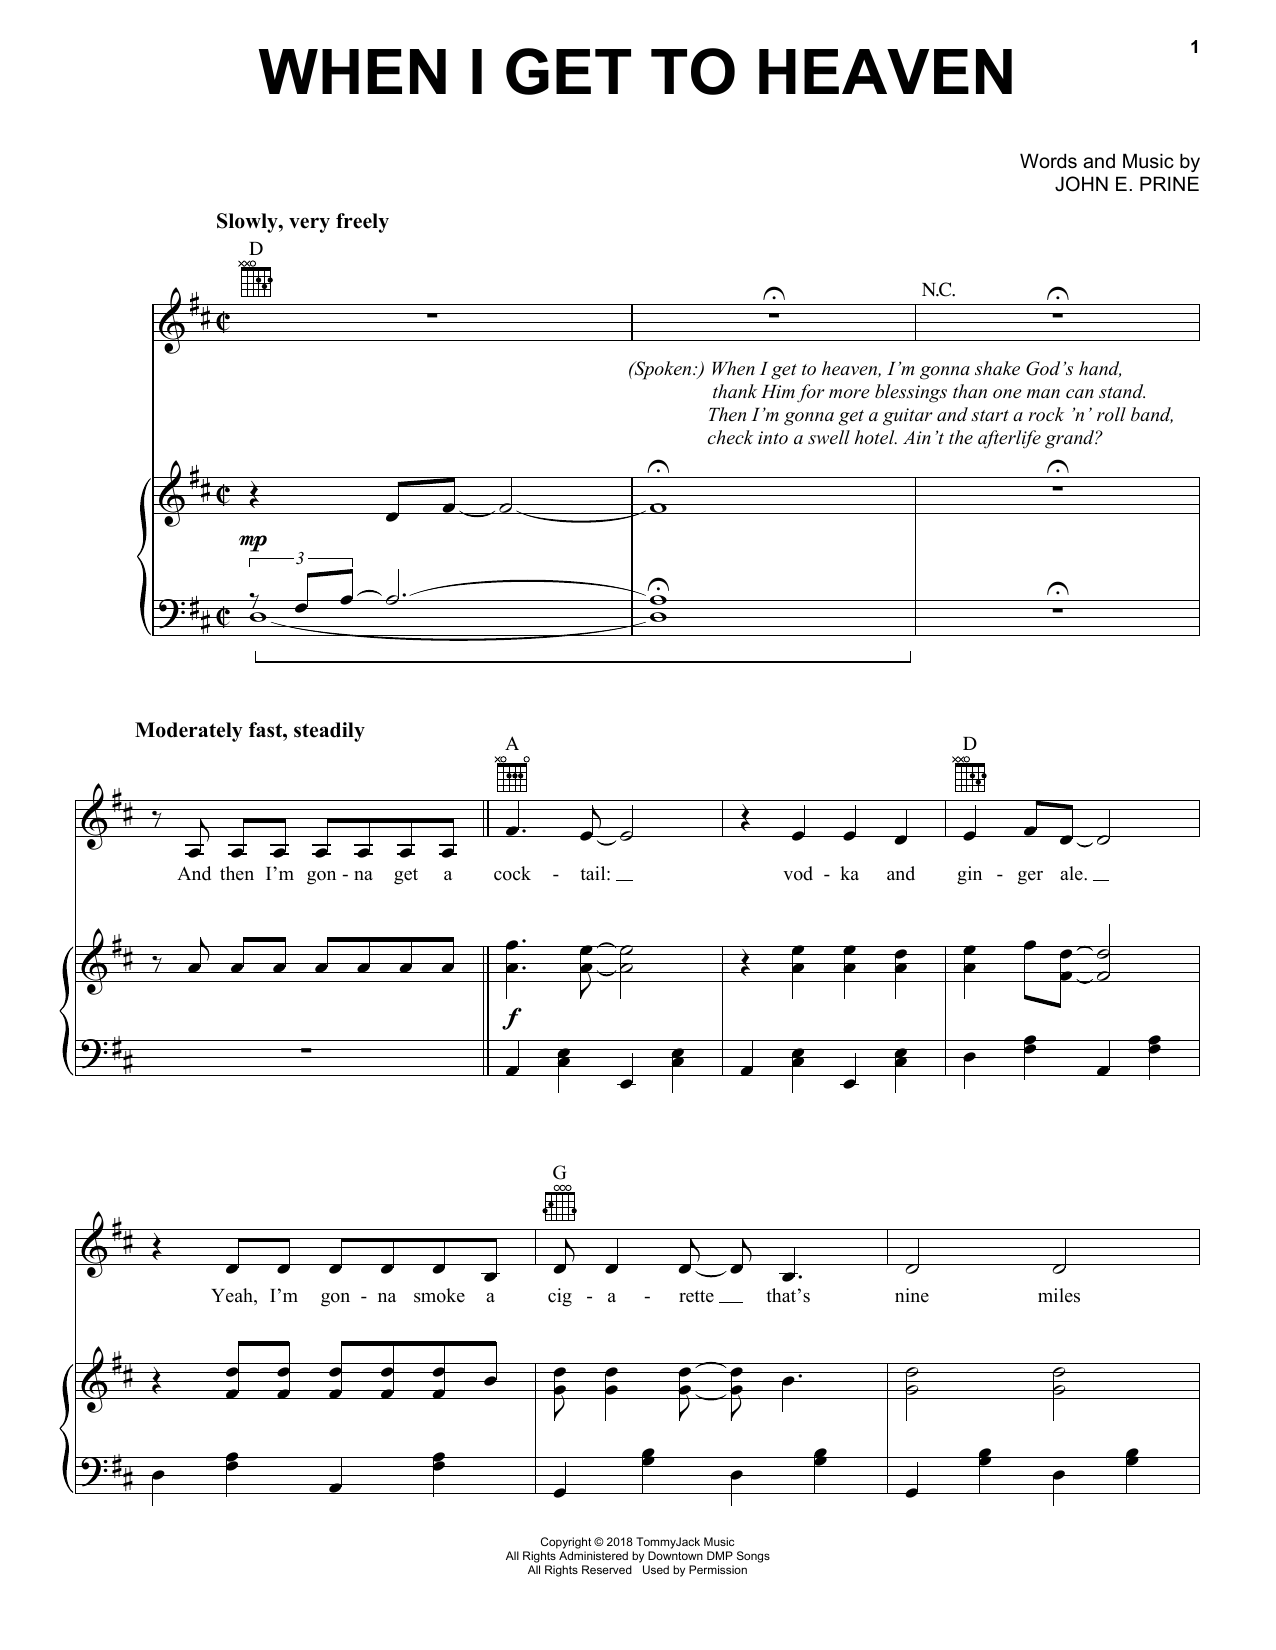 John Prine When I Get To Heaven Sheet Music Notes & Chords for Ukulele - Download or Print PDF